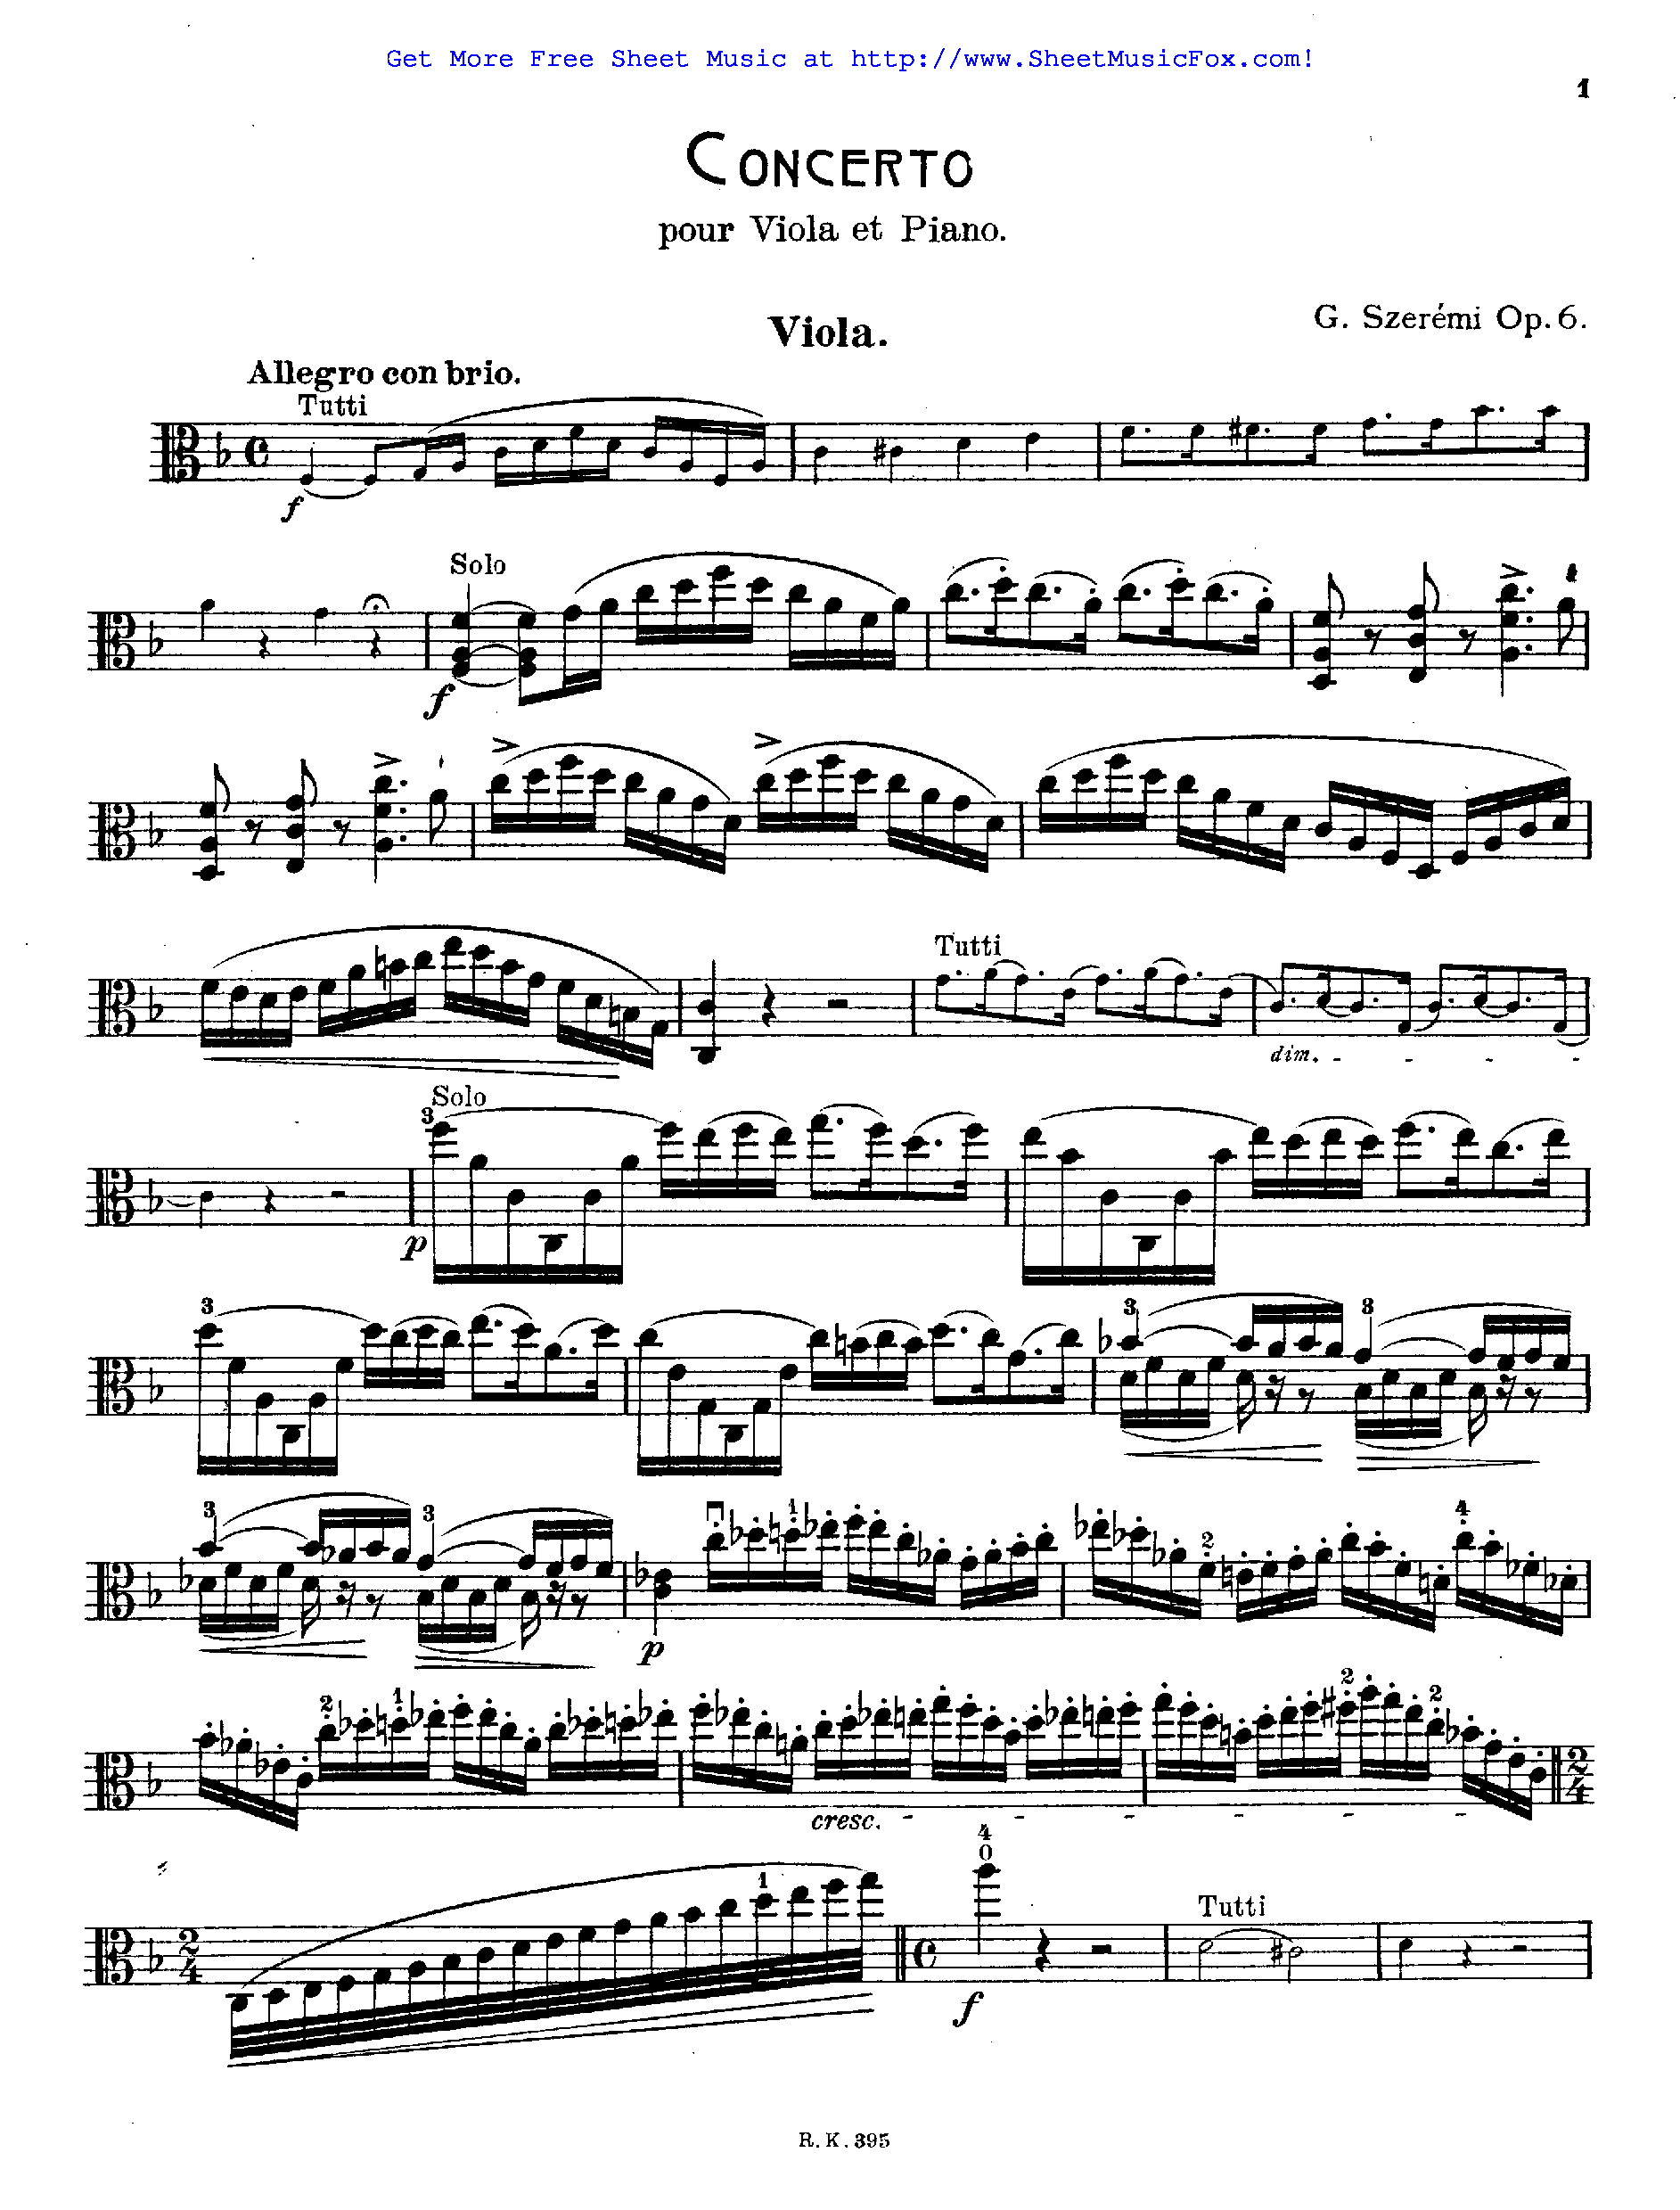 [BETTER] David Gyula Viola Concerto Pdf Downloadl 152233